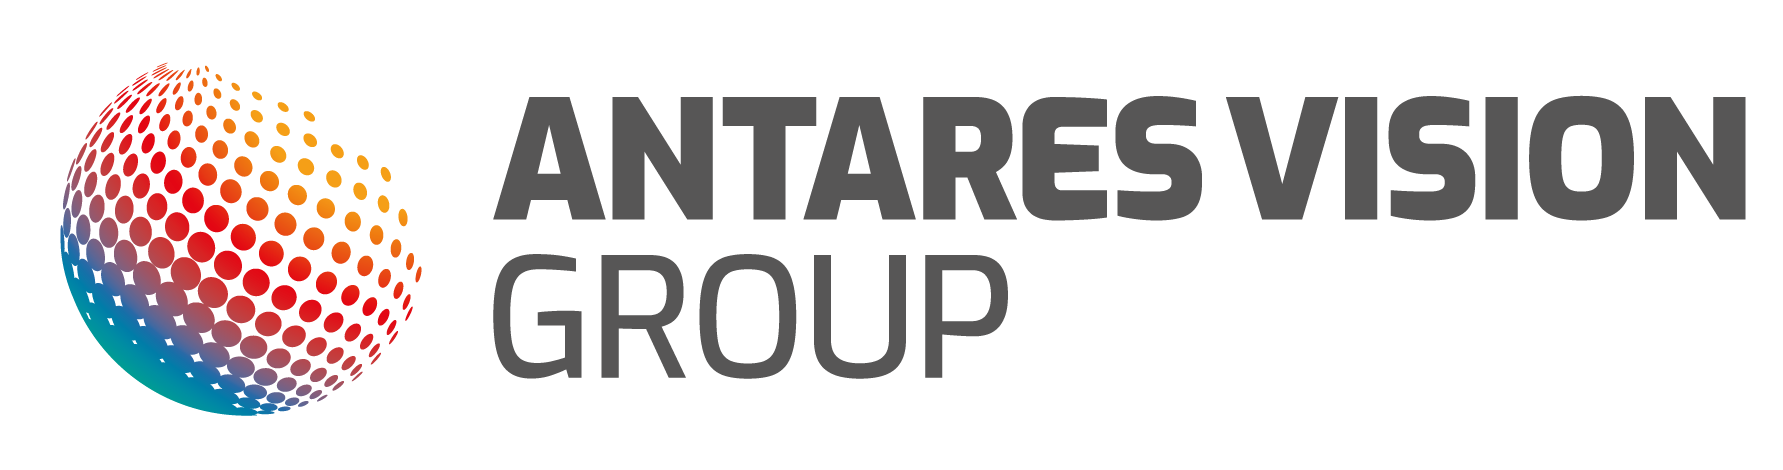  Antares_Vision_Group